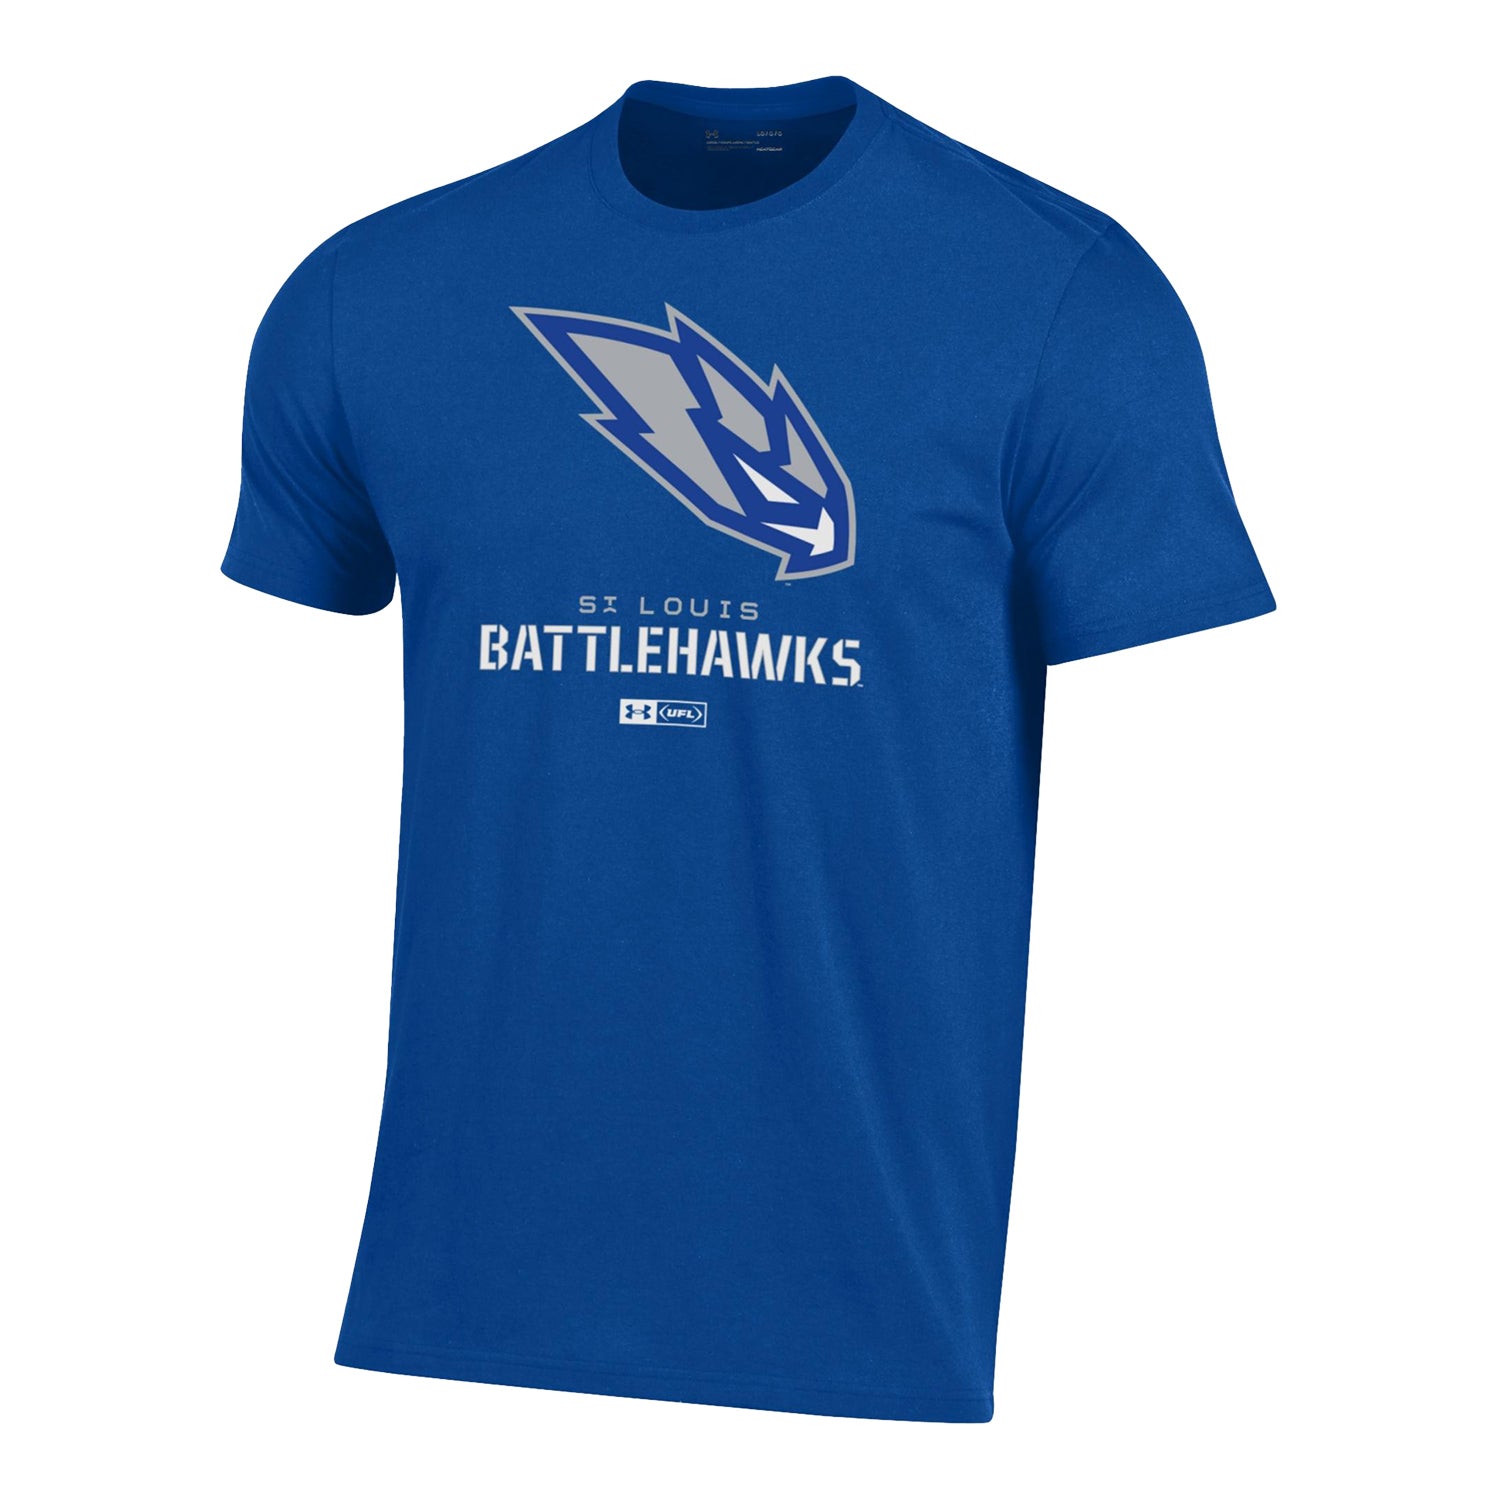 Under Armour St. Louis Battlehawks Performance T-Shirt In Blue - Front View